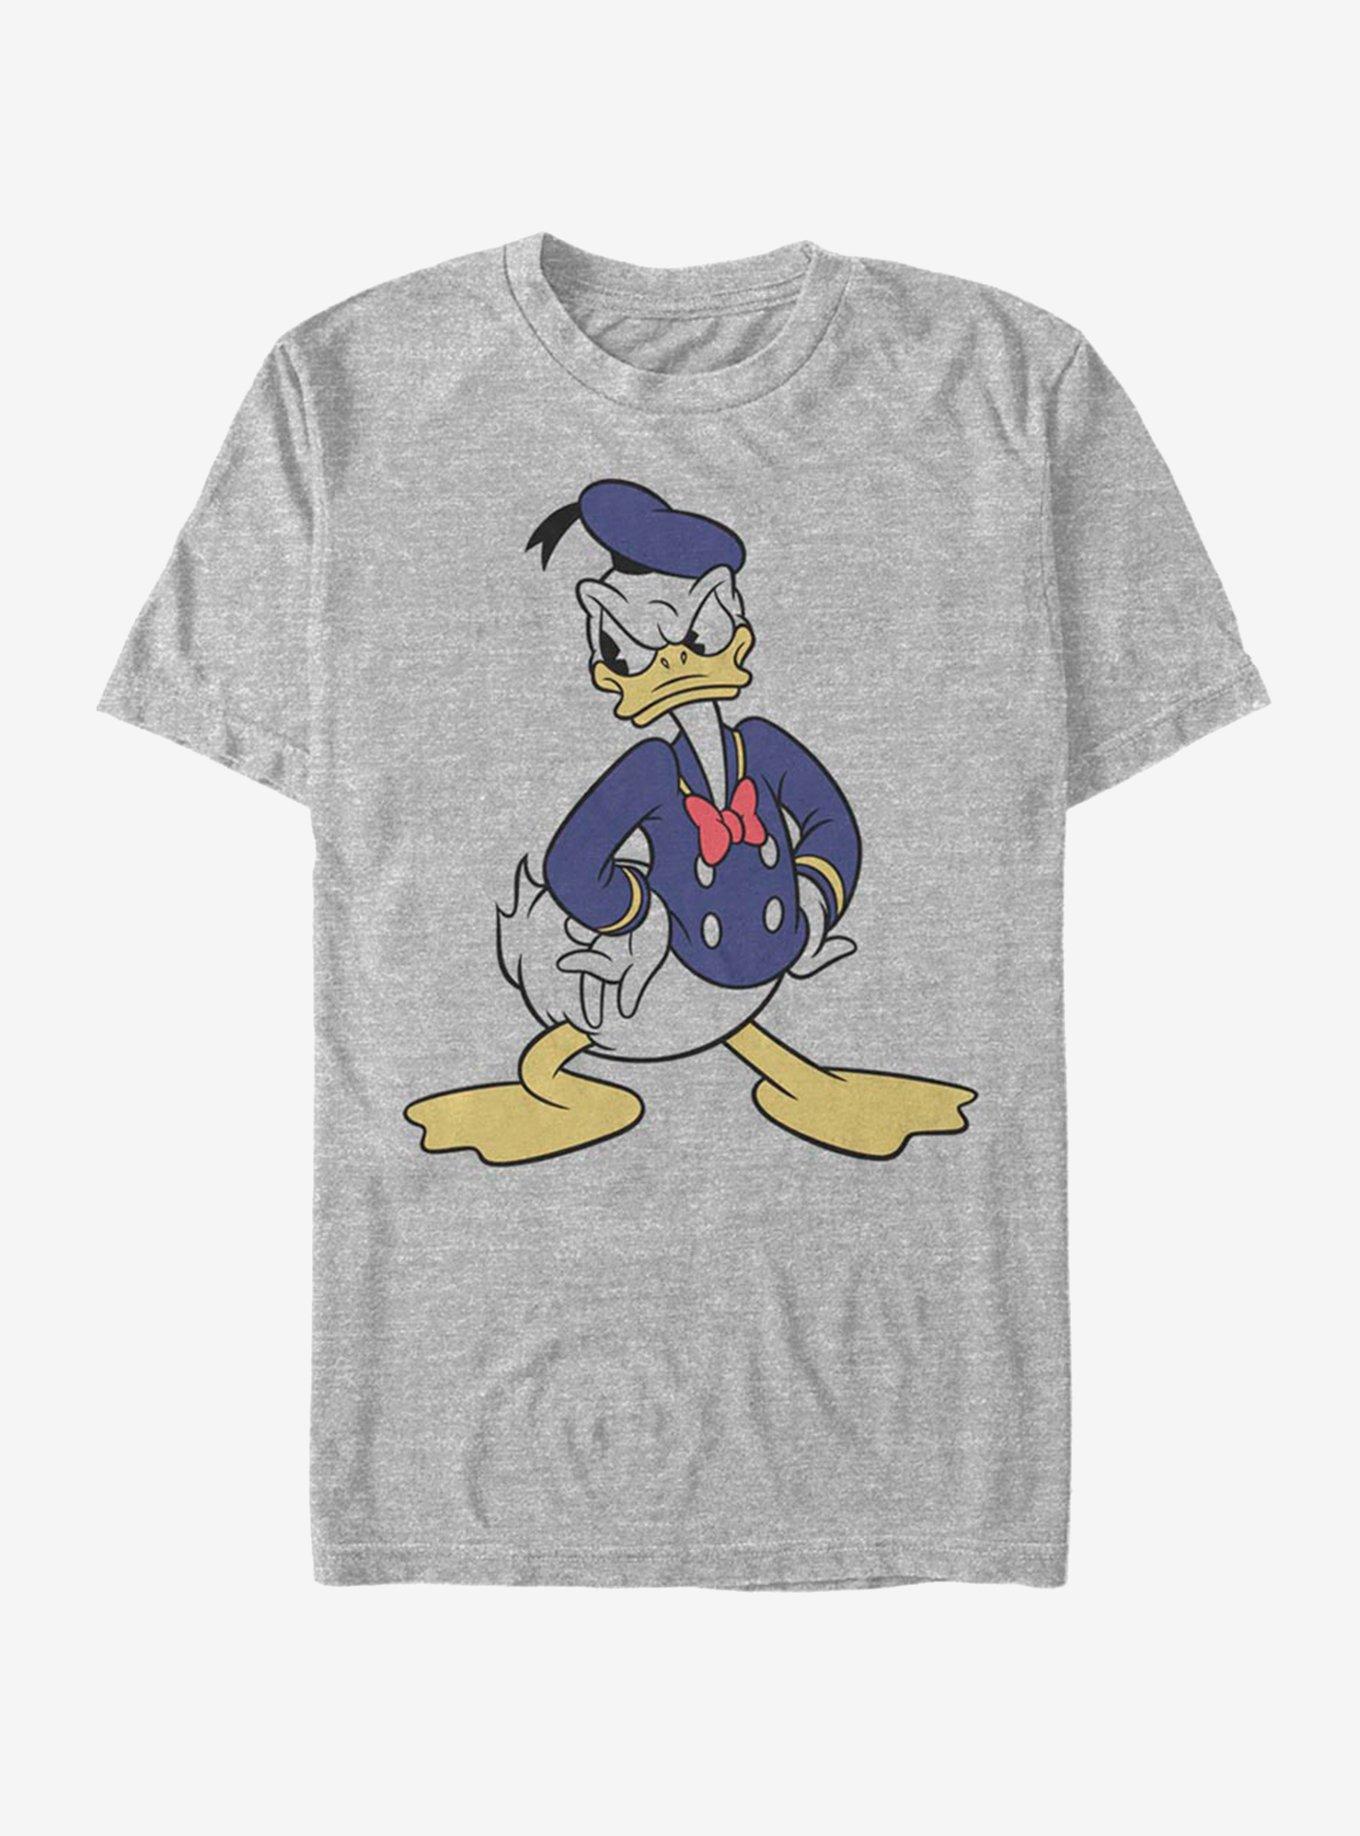 Louis Vuitton Donald Duck Shirt - Vintagenclassic Tee